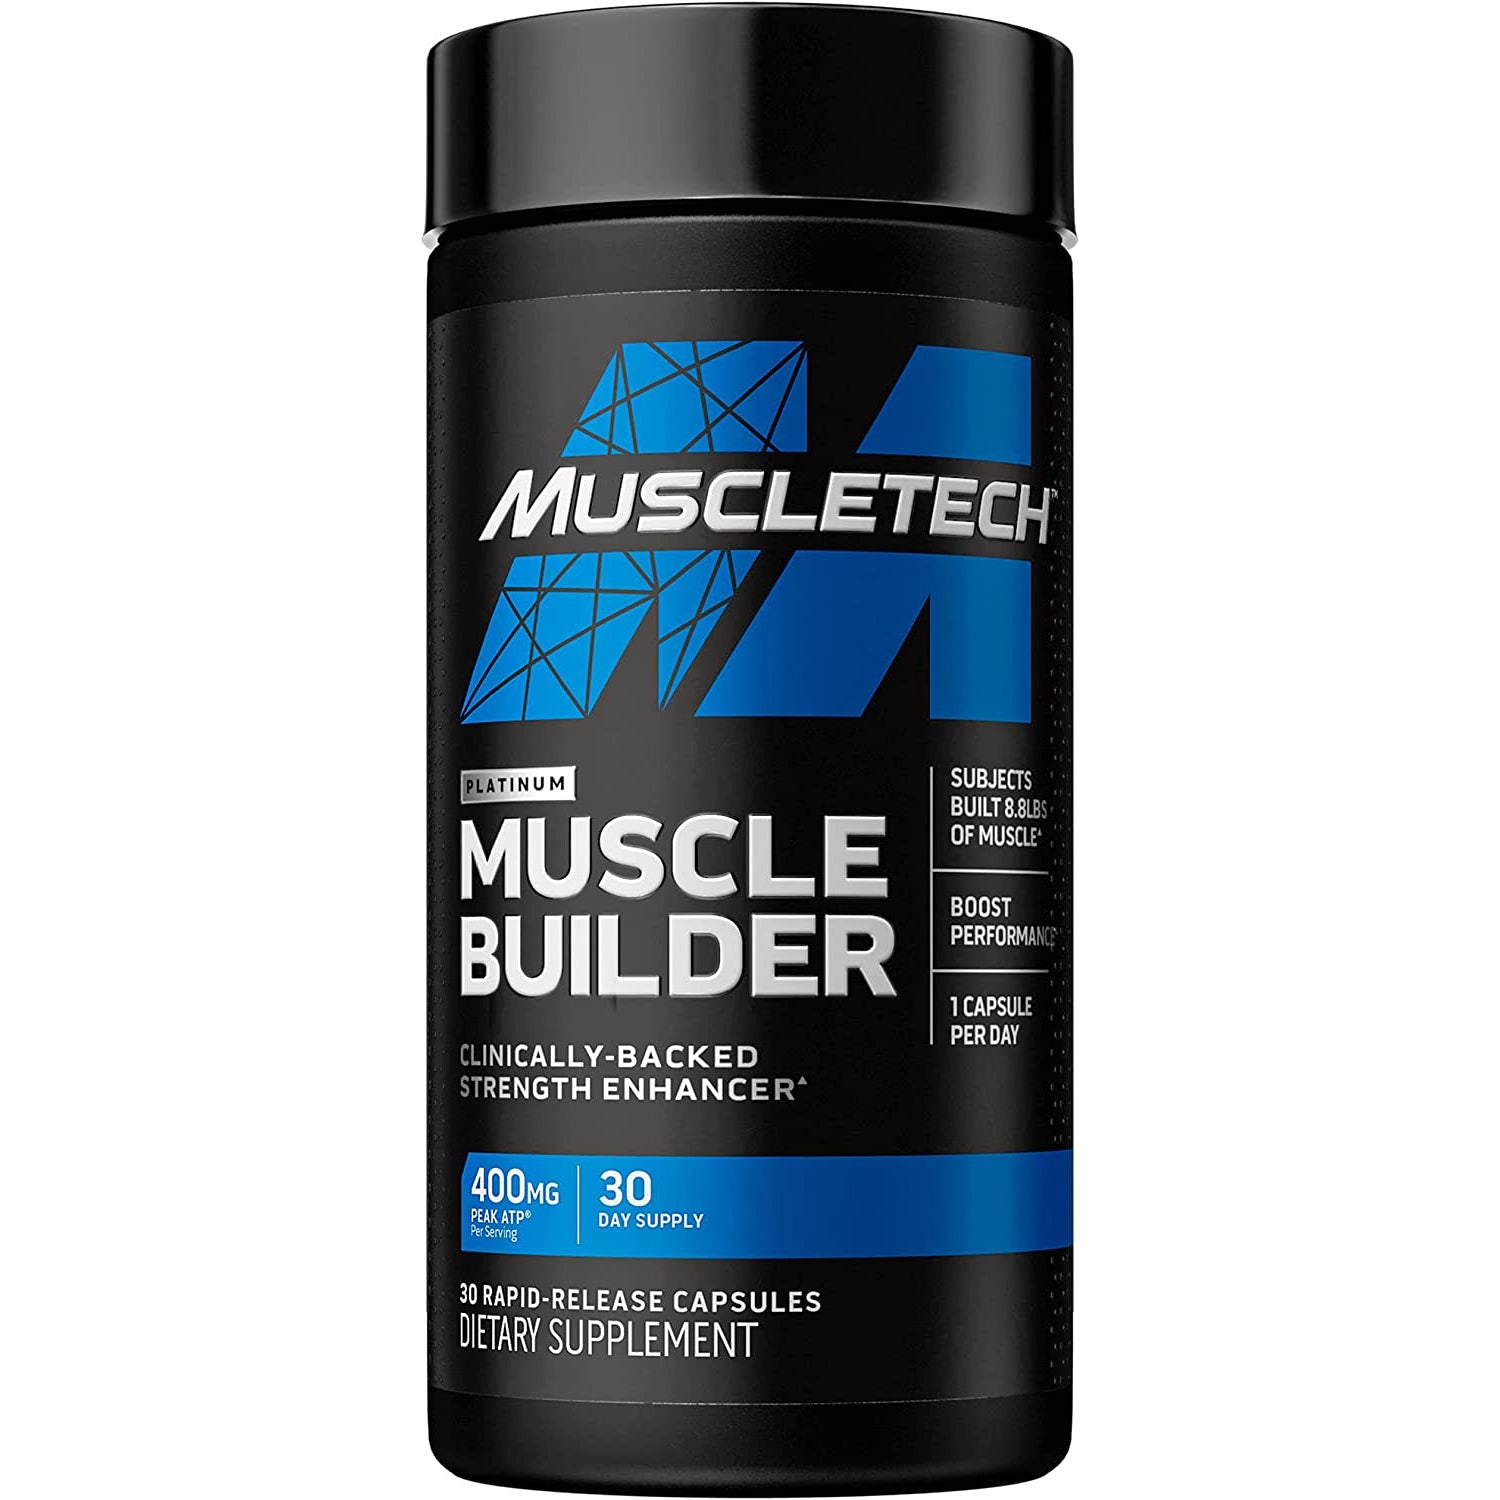 MuscleTech Muscle Builder